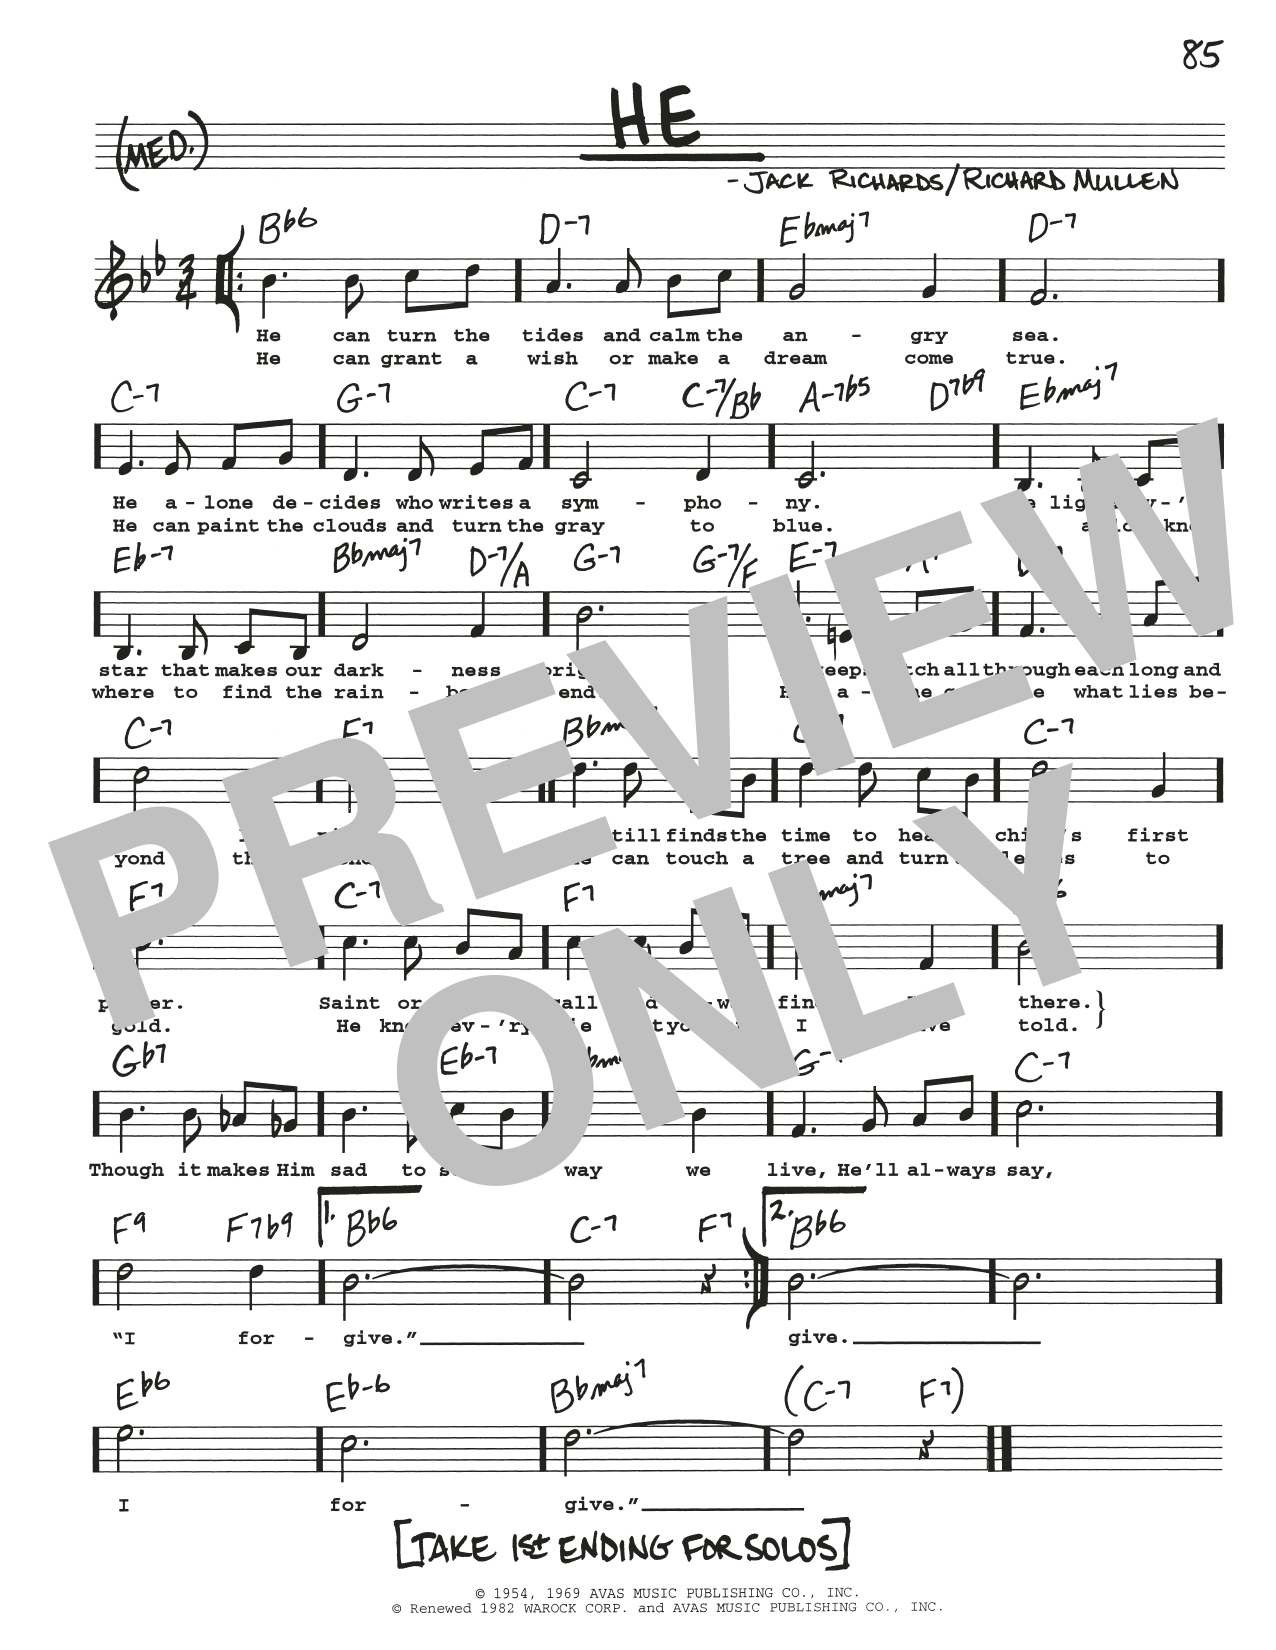 Richard Mullan He Sheet Music Notes & Chords for Real Book – Melody, Lyrics & Chords - Download or Print PDF